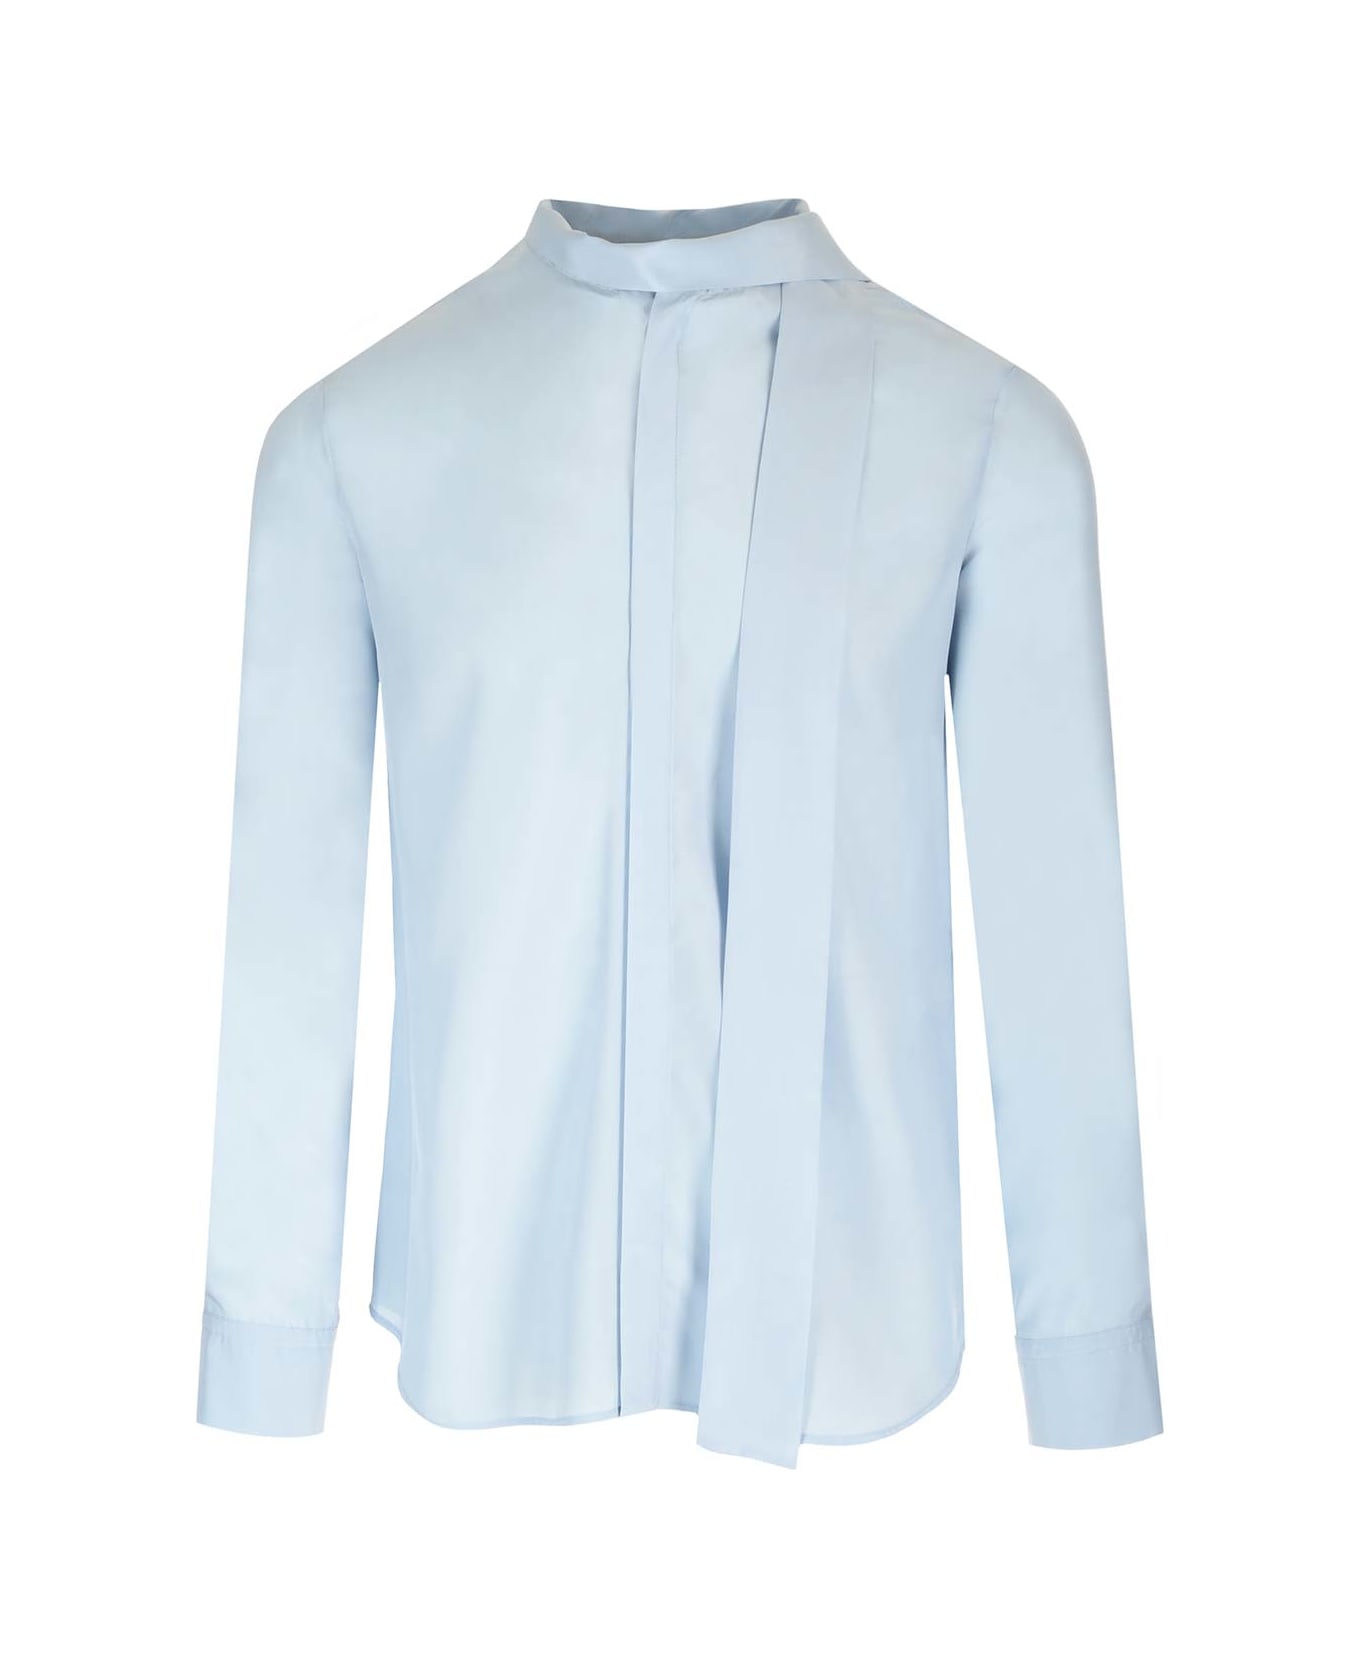 Valentino Garavani Light Blue Silk Shirt - Light blue